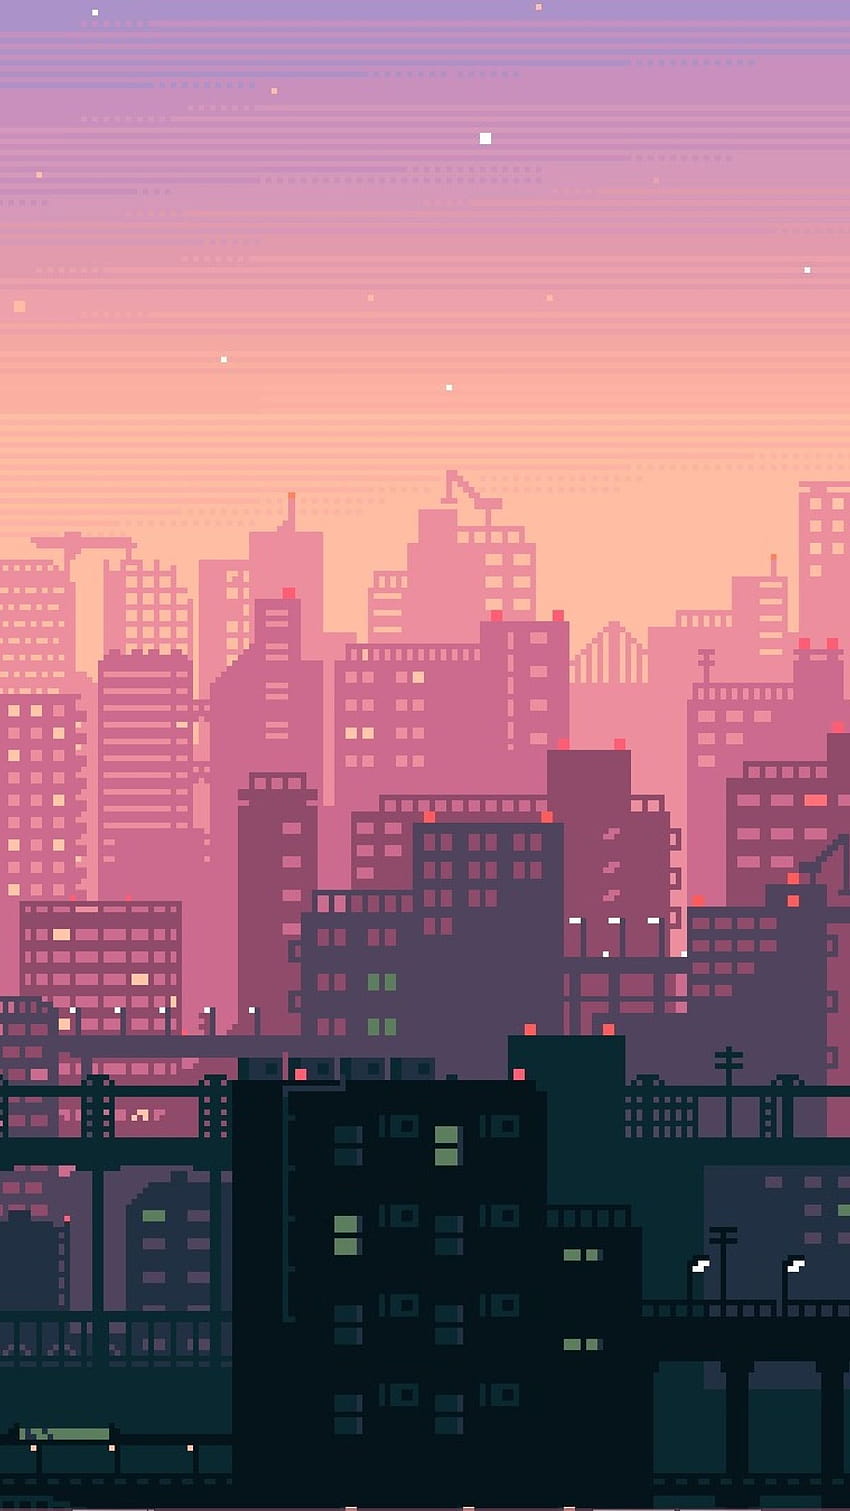 Pixel City iphone wallpaper by SailorTrekkie92 on DeviantArt